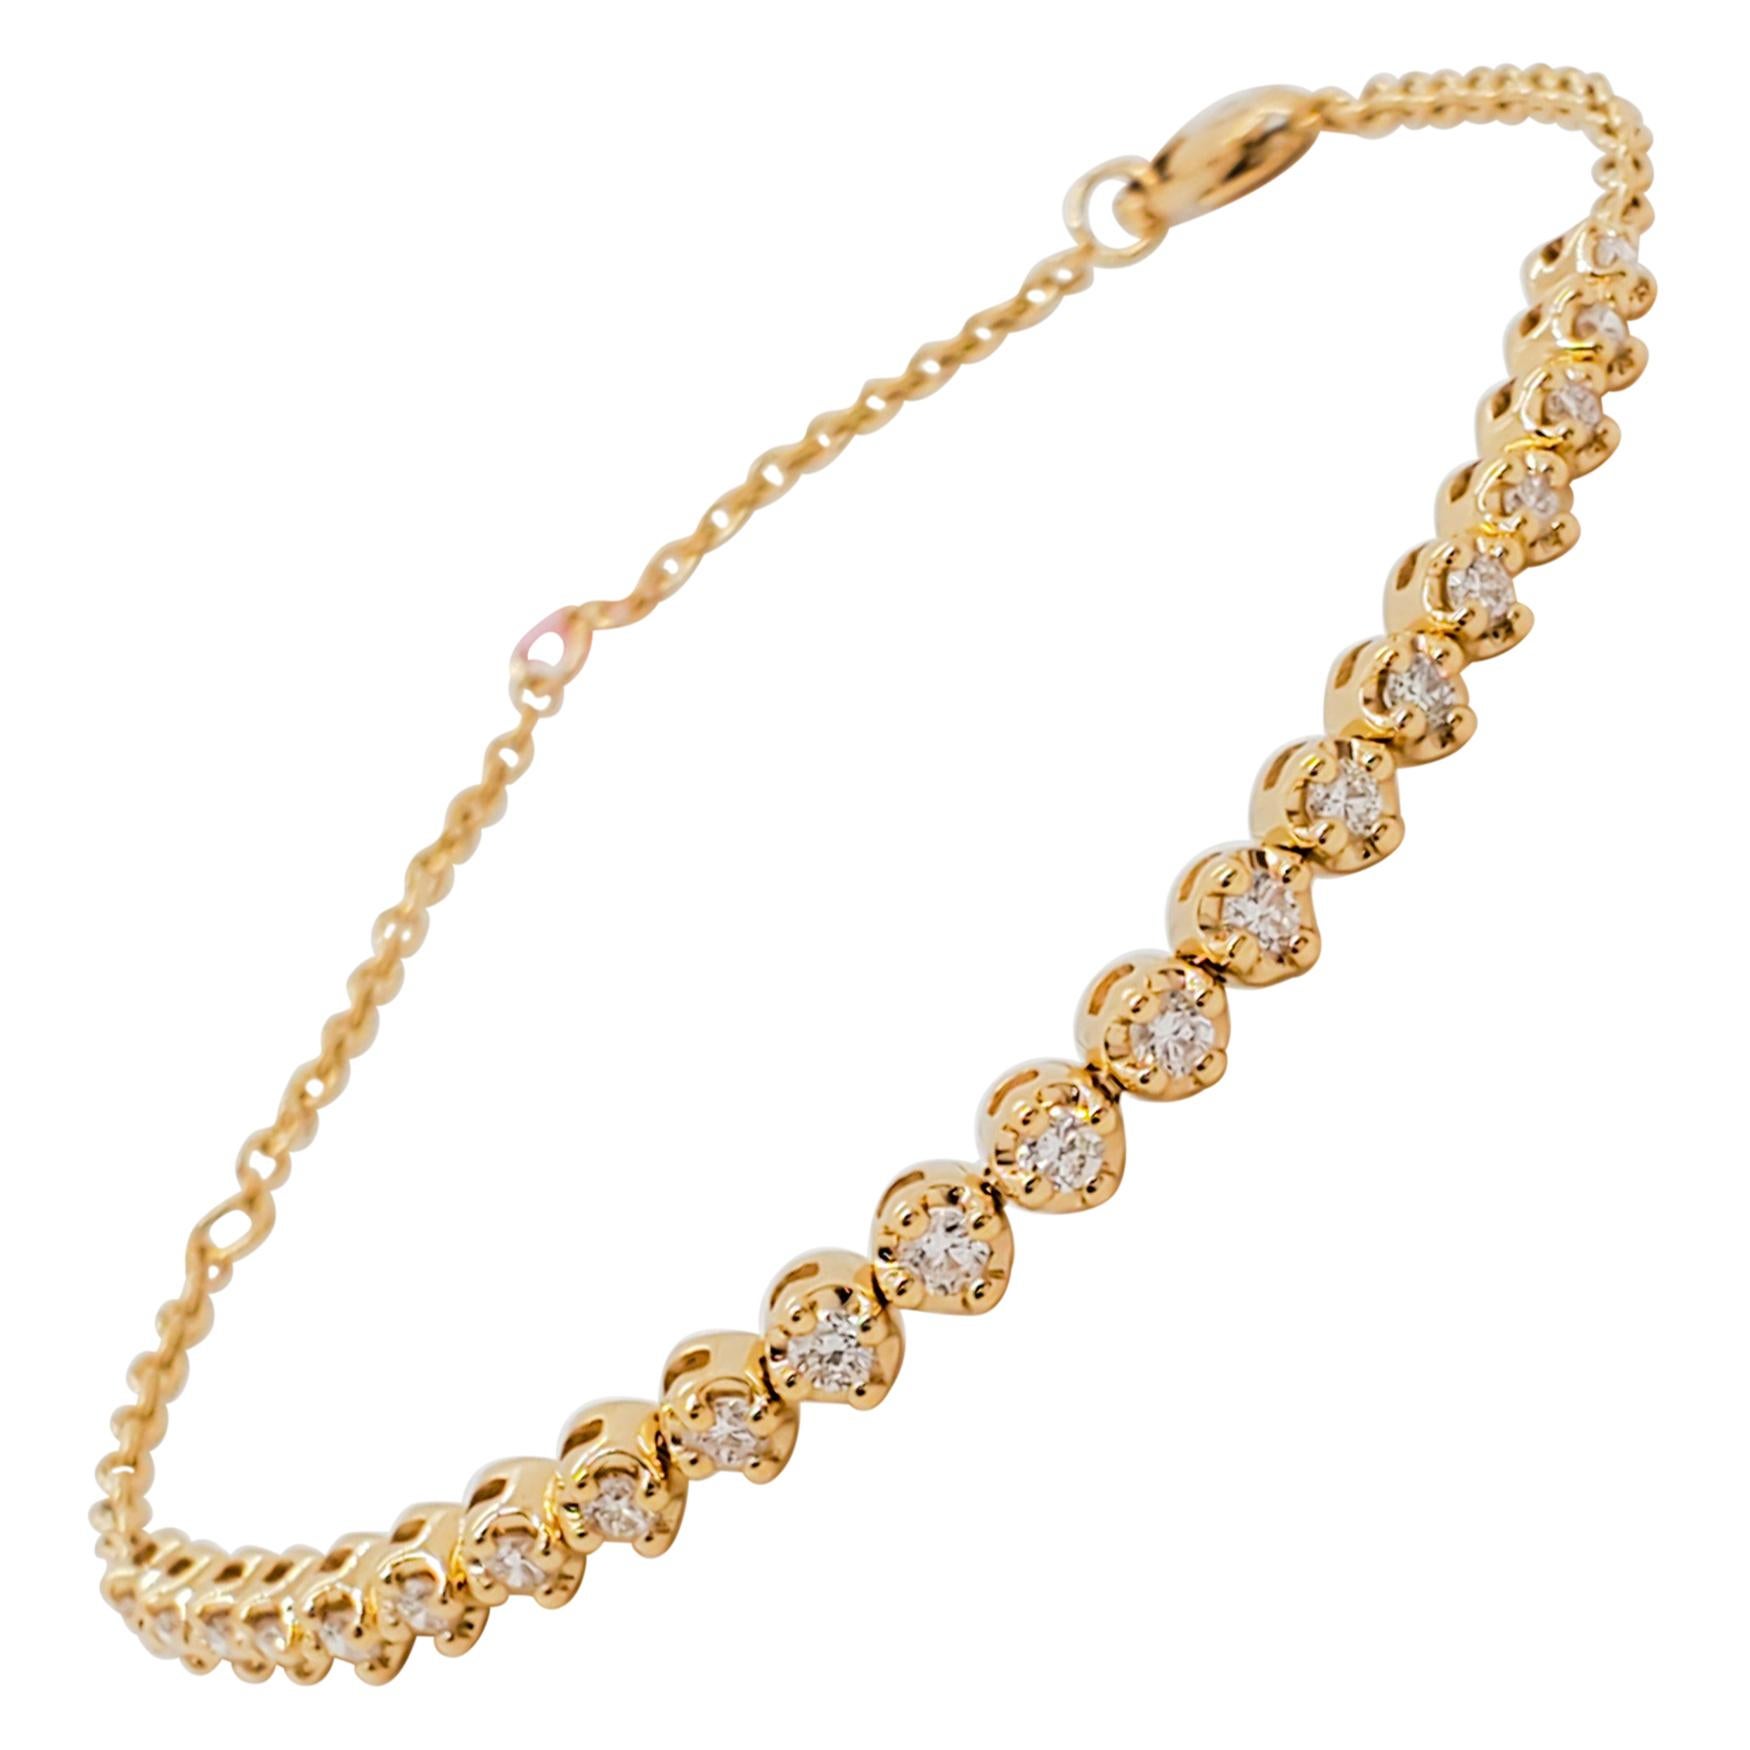 Estate White Diamond Bracelet with Chain in 18k Yellow Gold